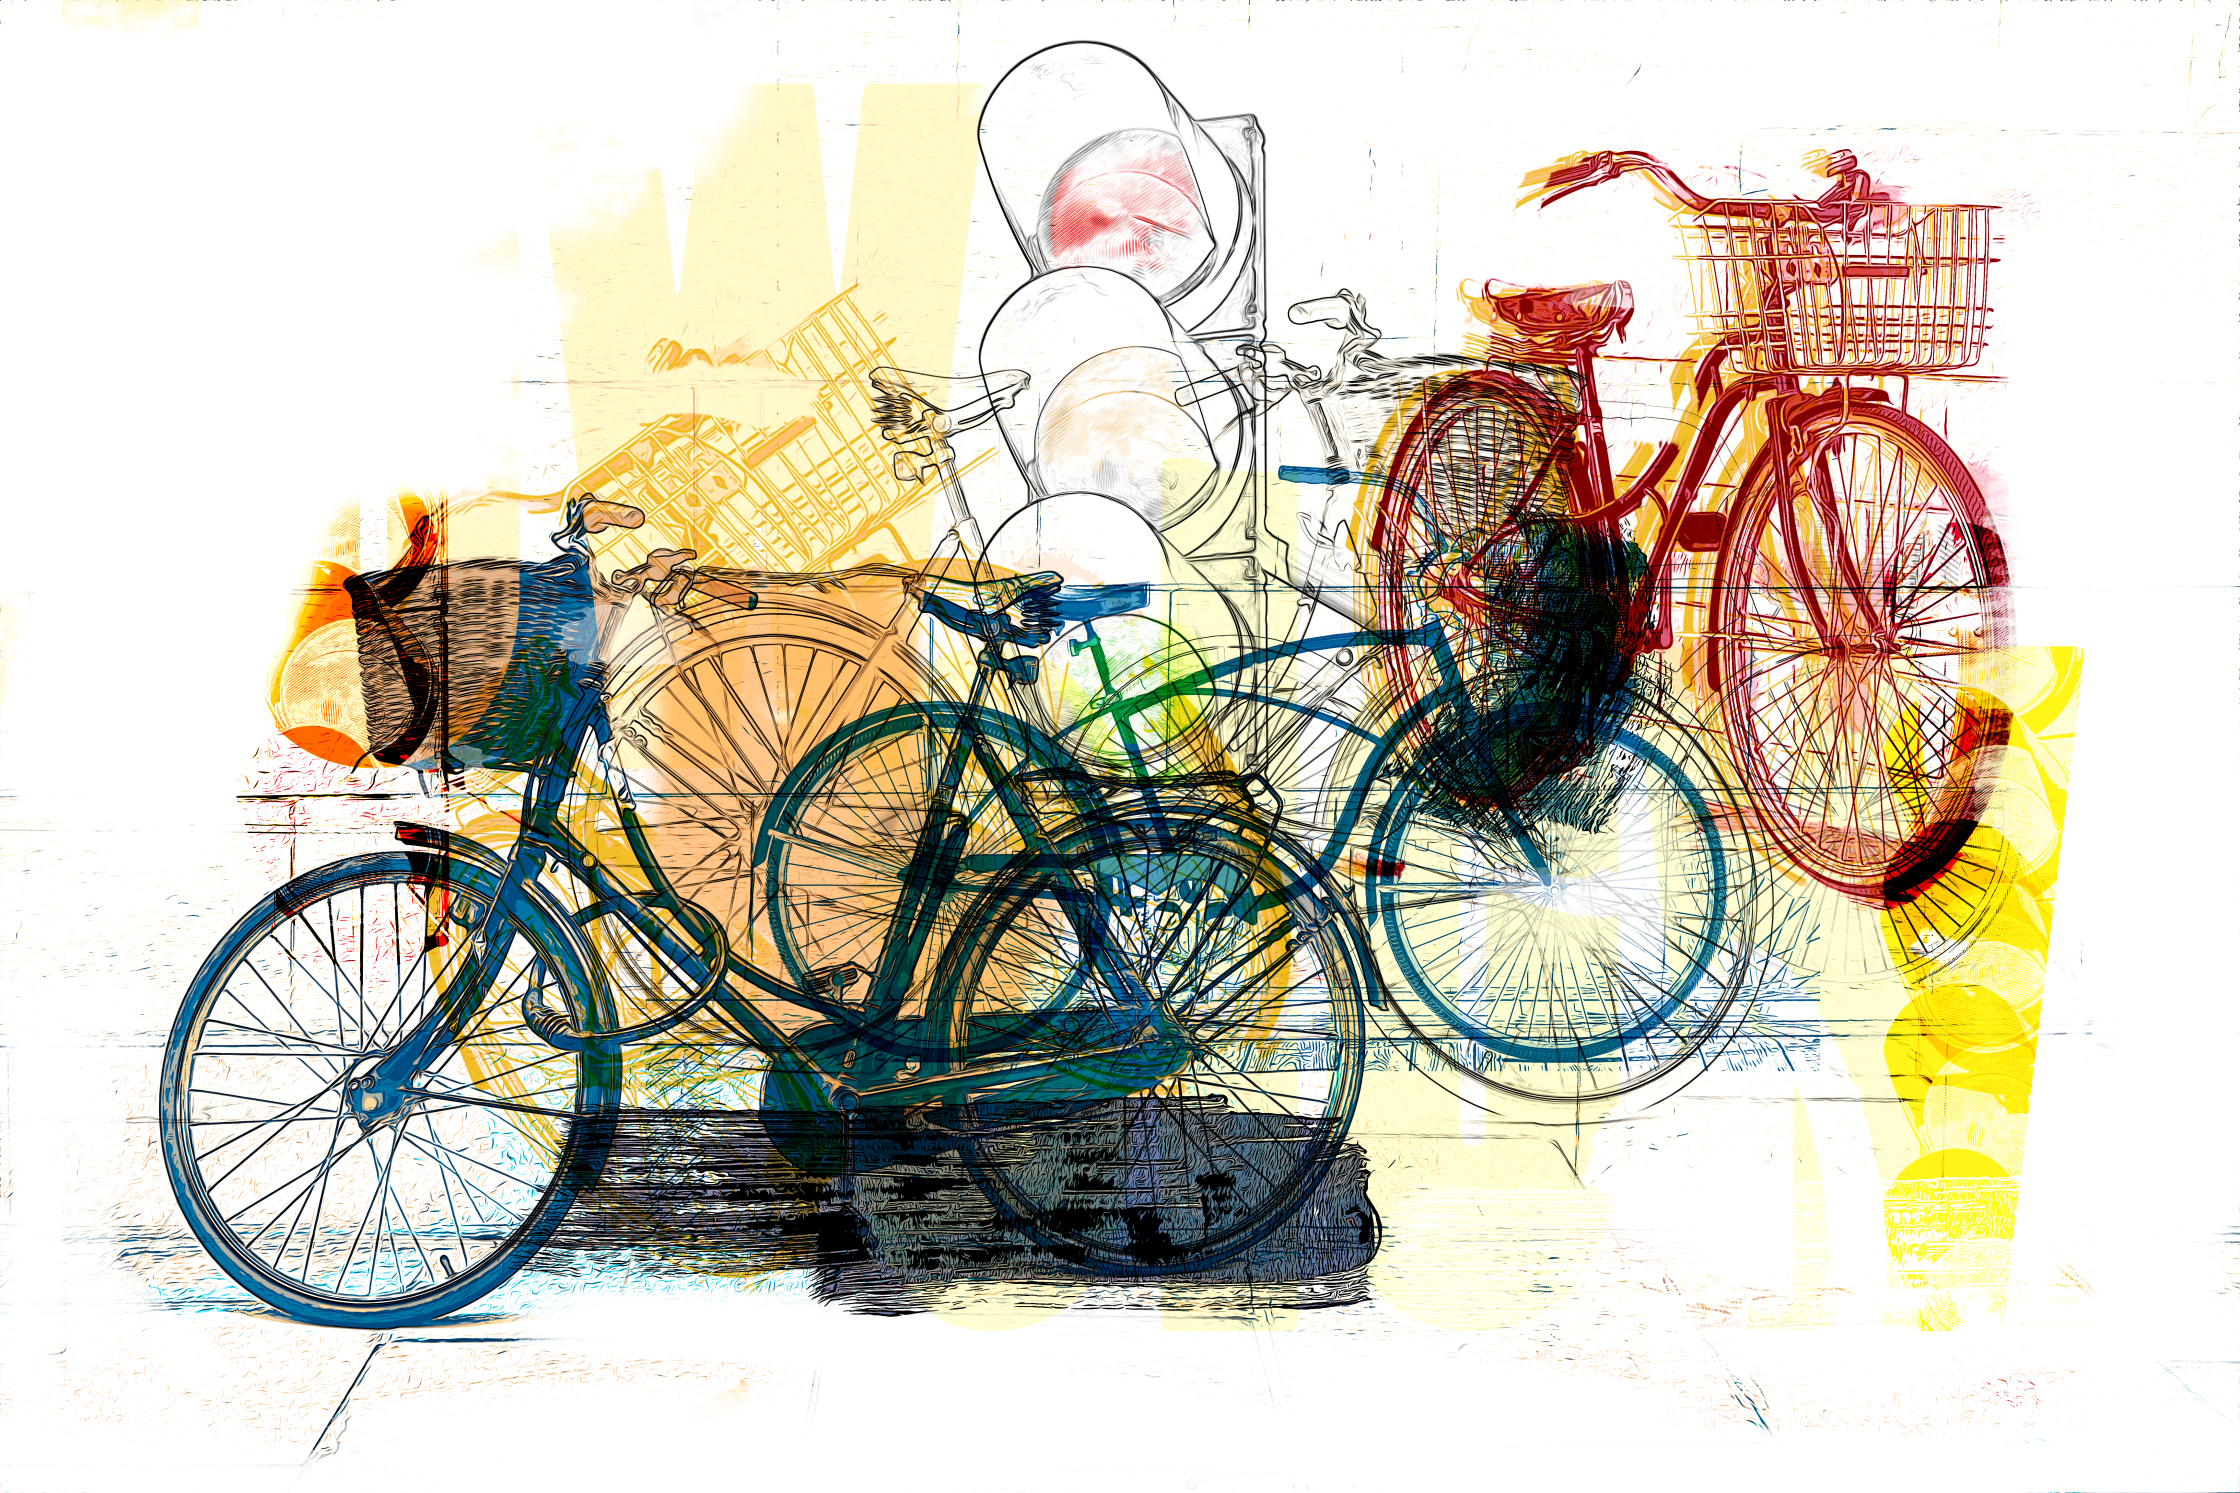 Europe and bikes editorial illustration .jpg